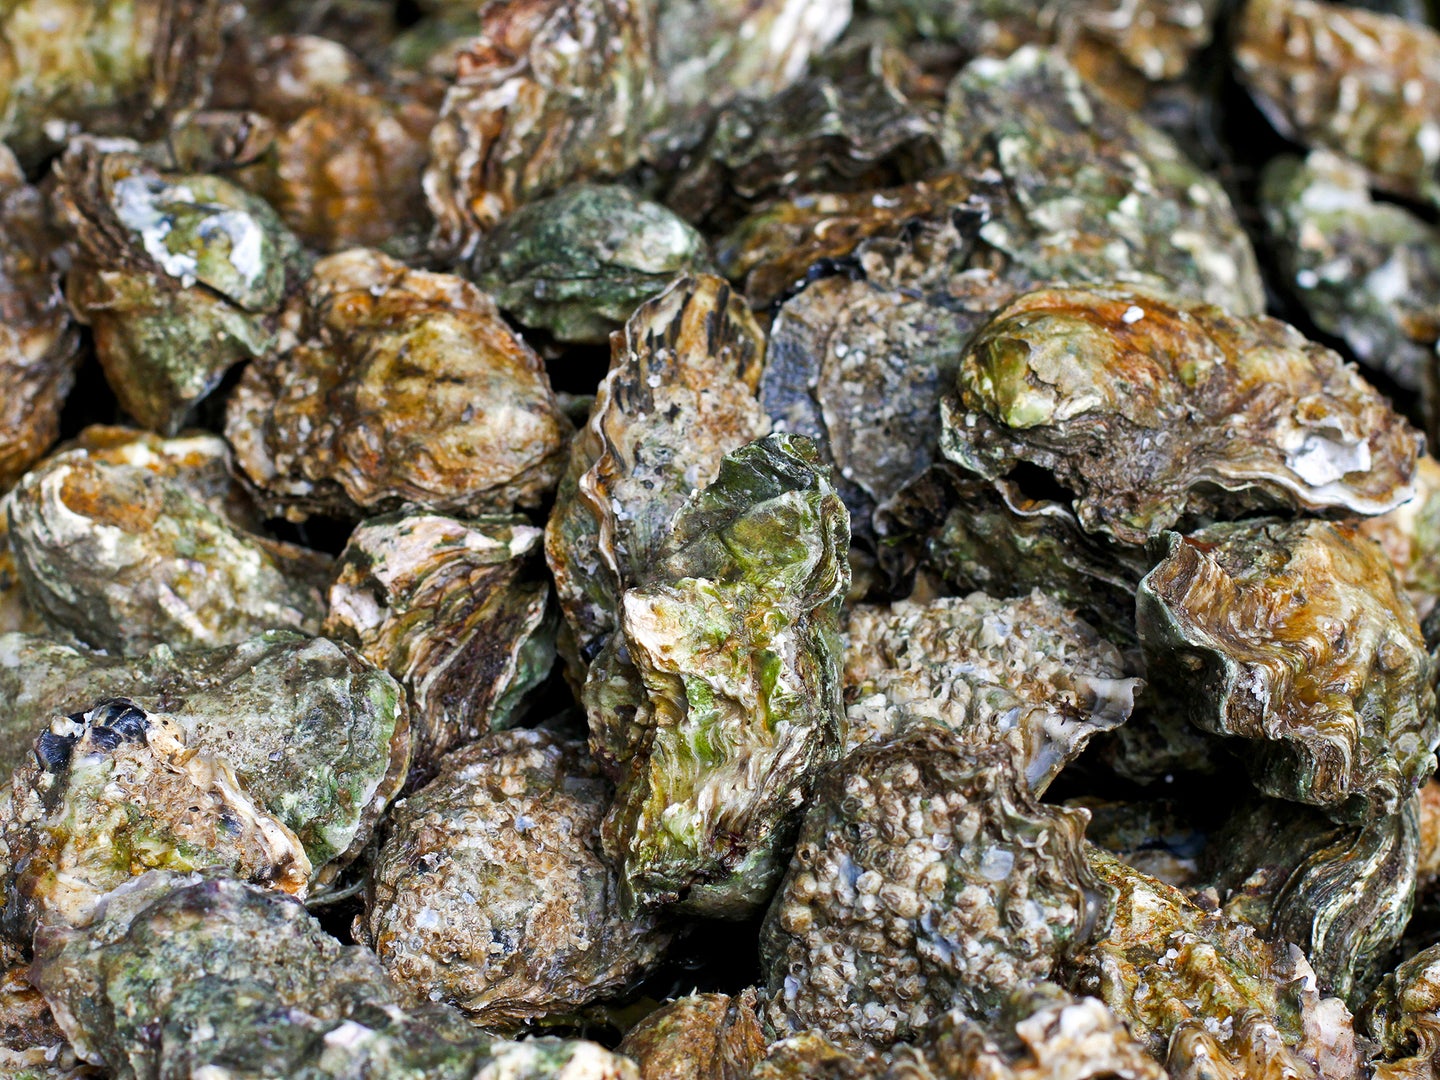 Empty oyster shells